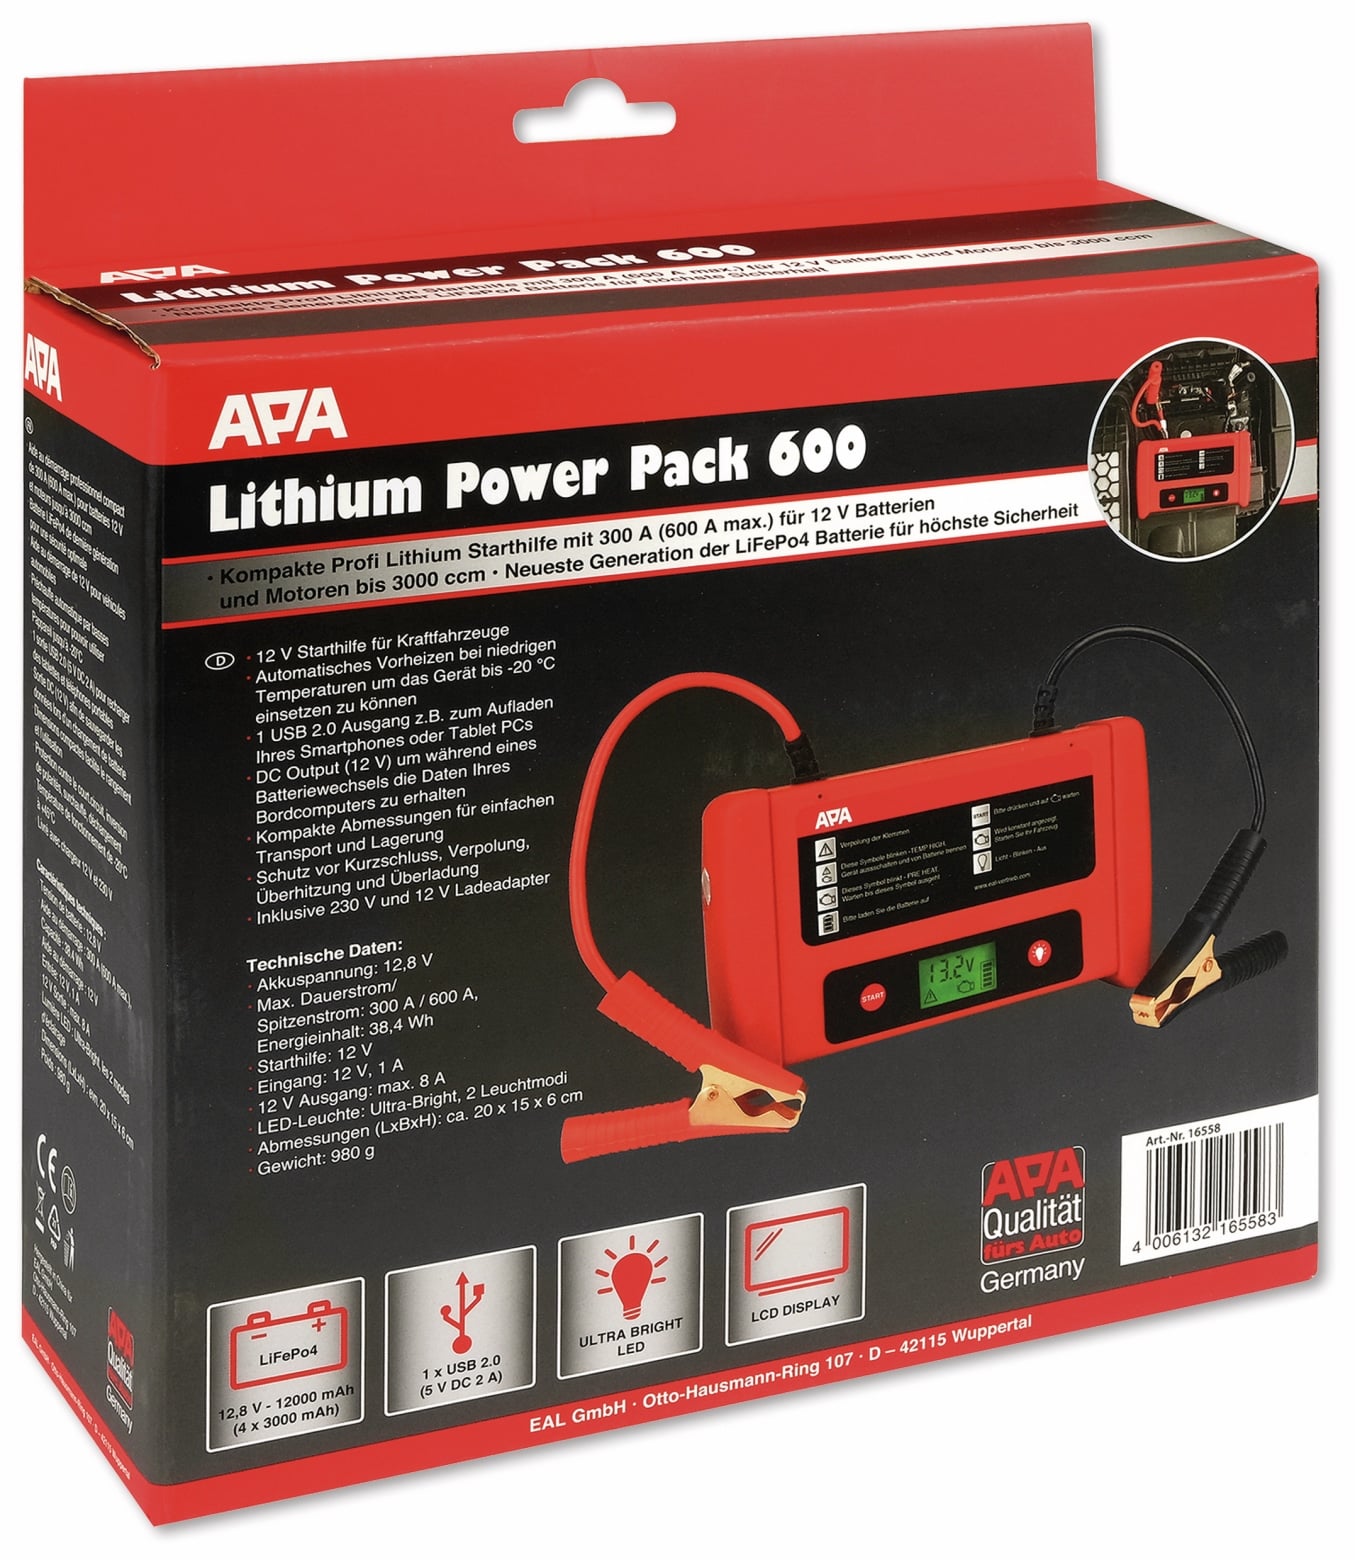 APA Starthilfegerät 16558, 12 V, 600 A, Lithium Powerpack